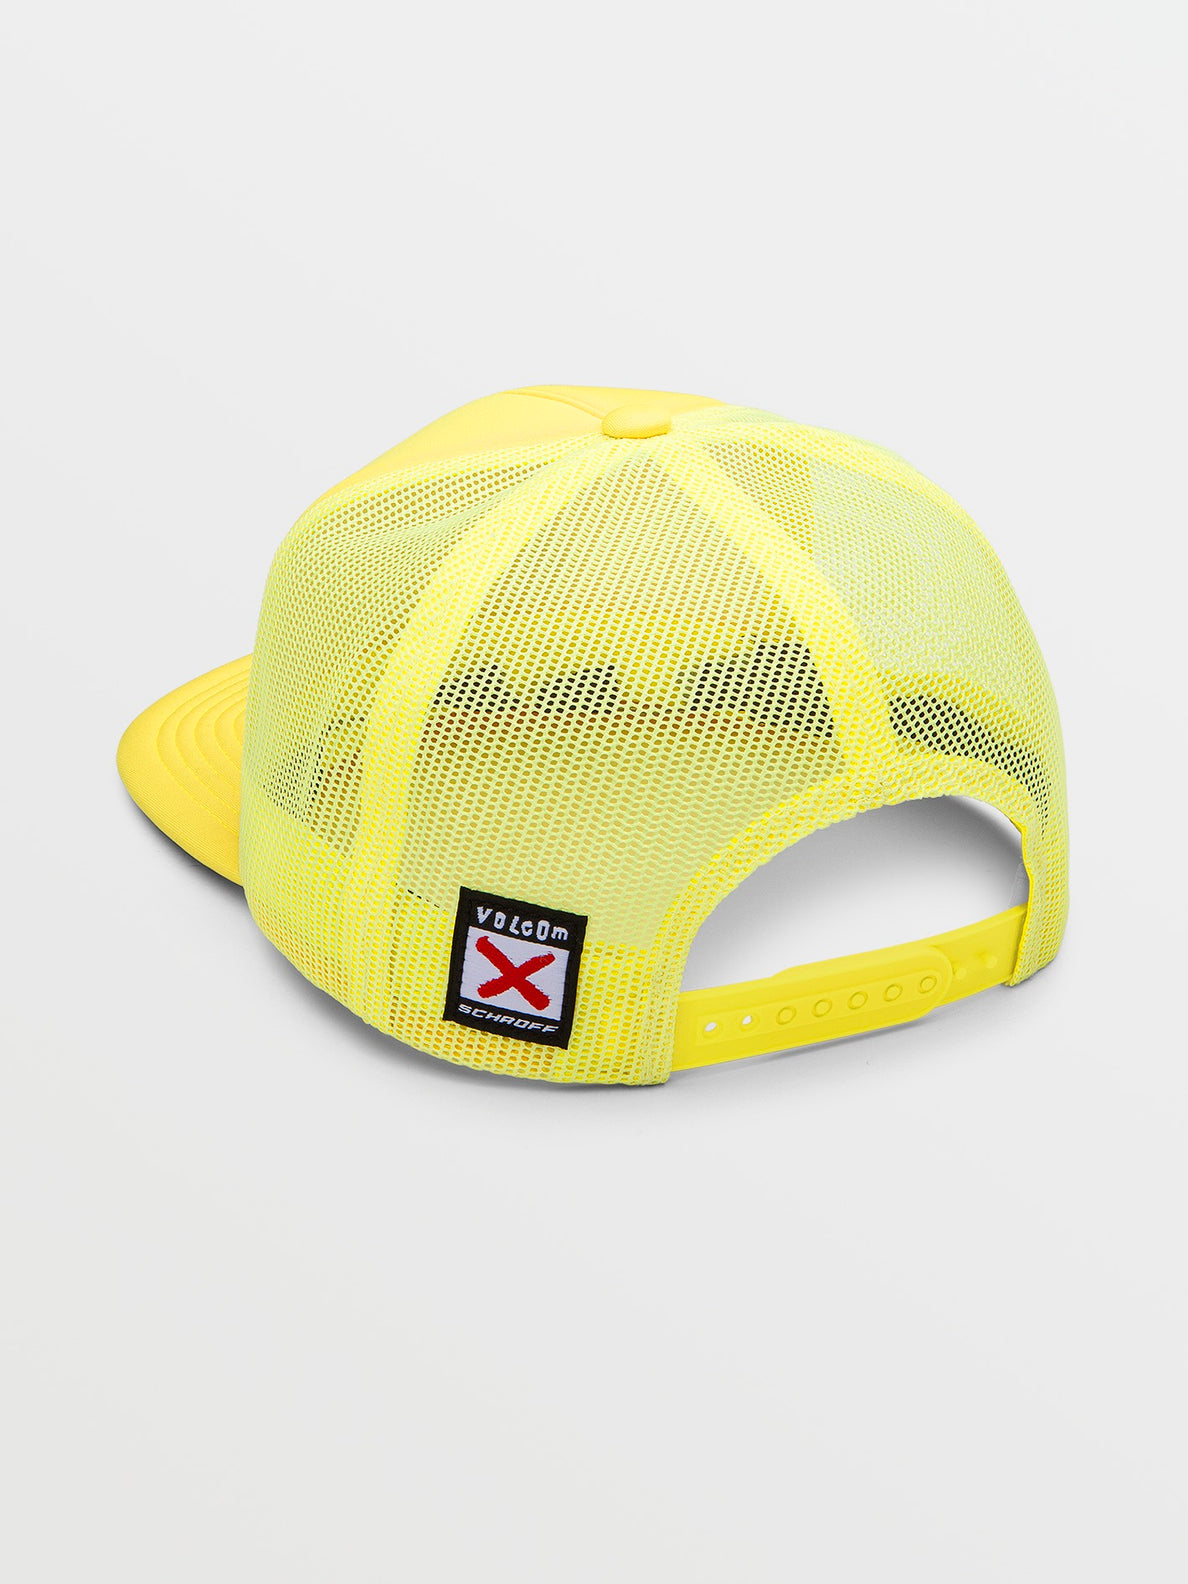 Schroff X Volcom Cheese Hat - Blazing Yellow